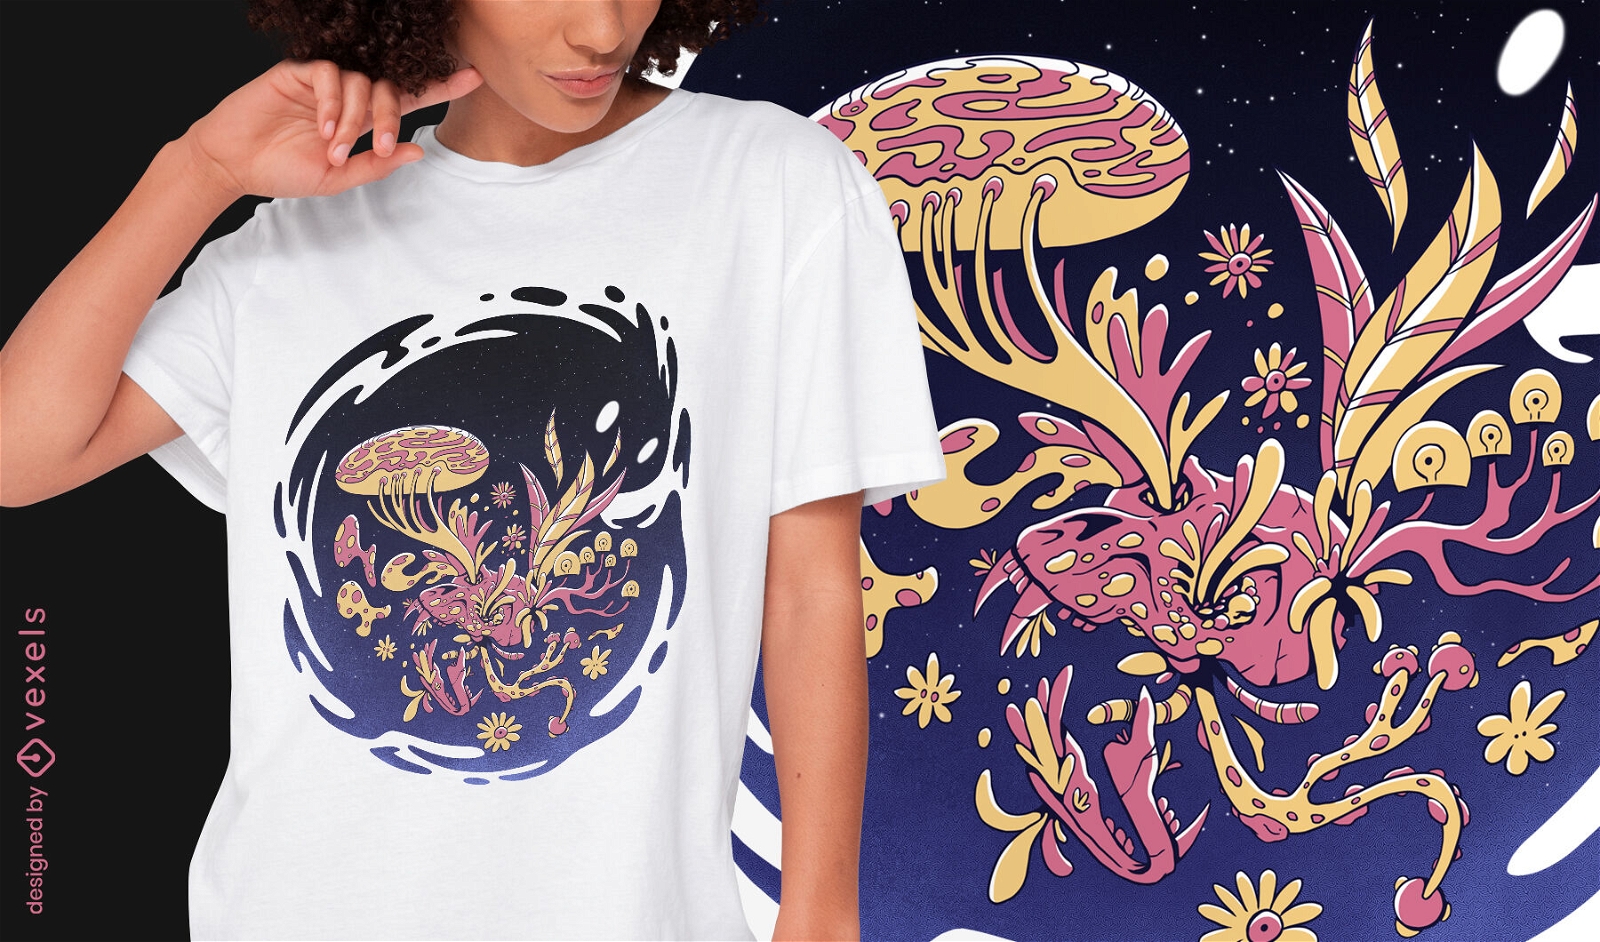 Diseño de camiseta psd de monstruo de calavera floral